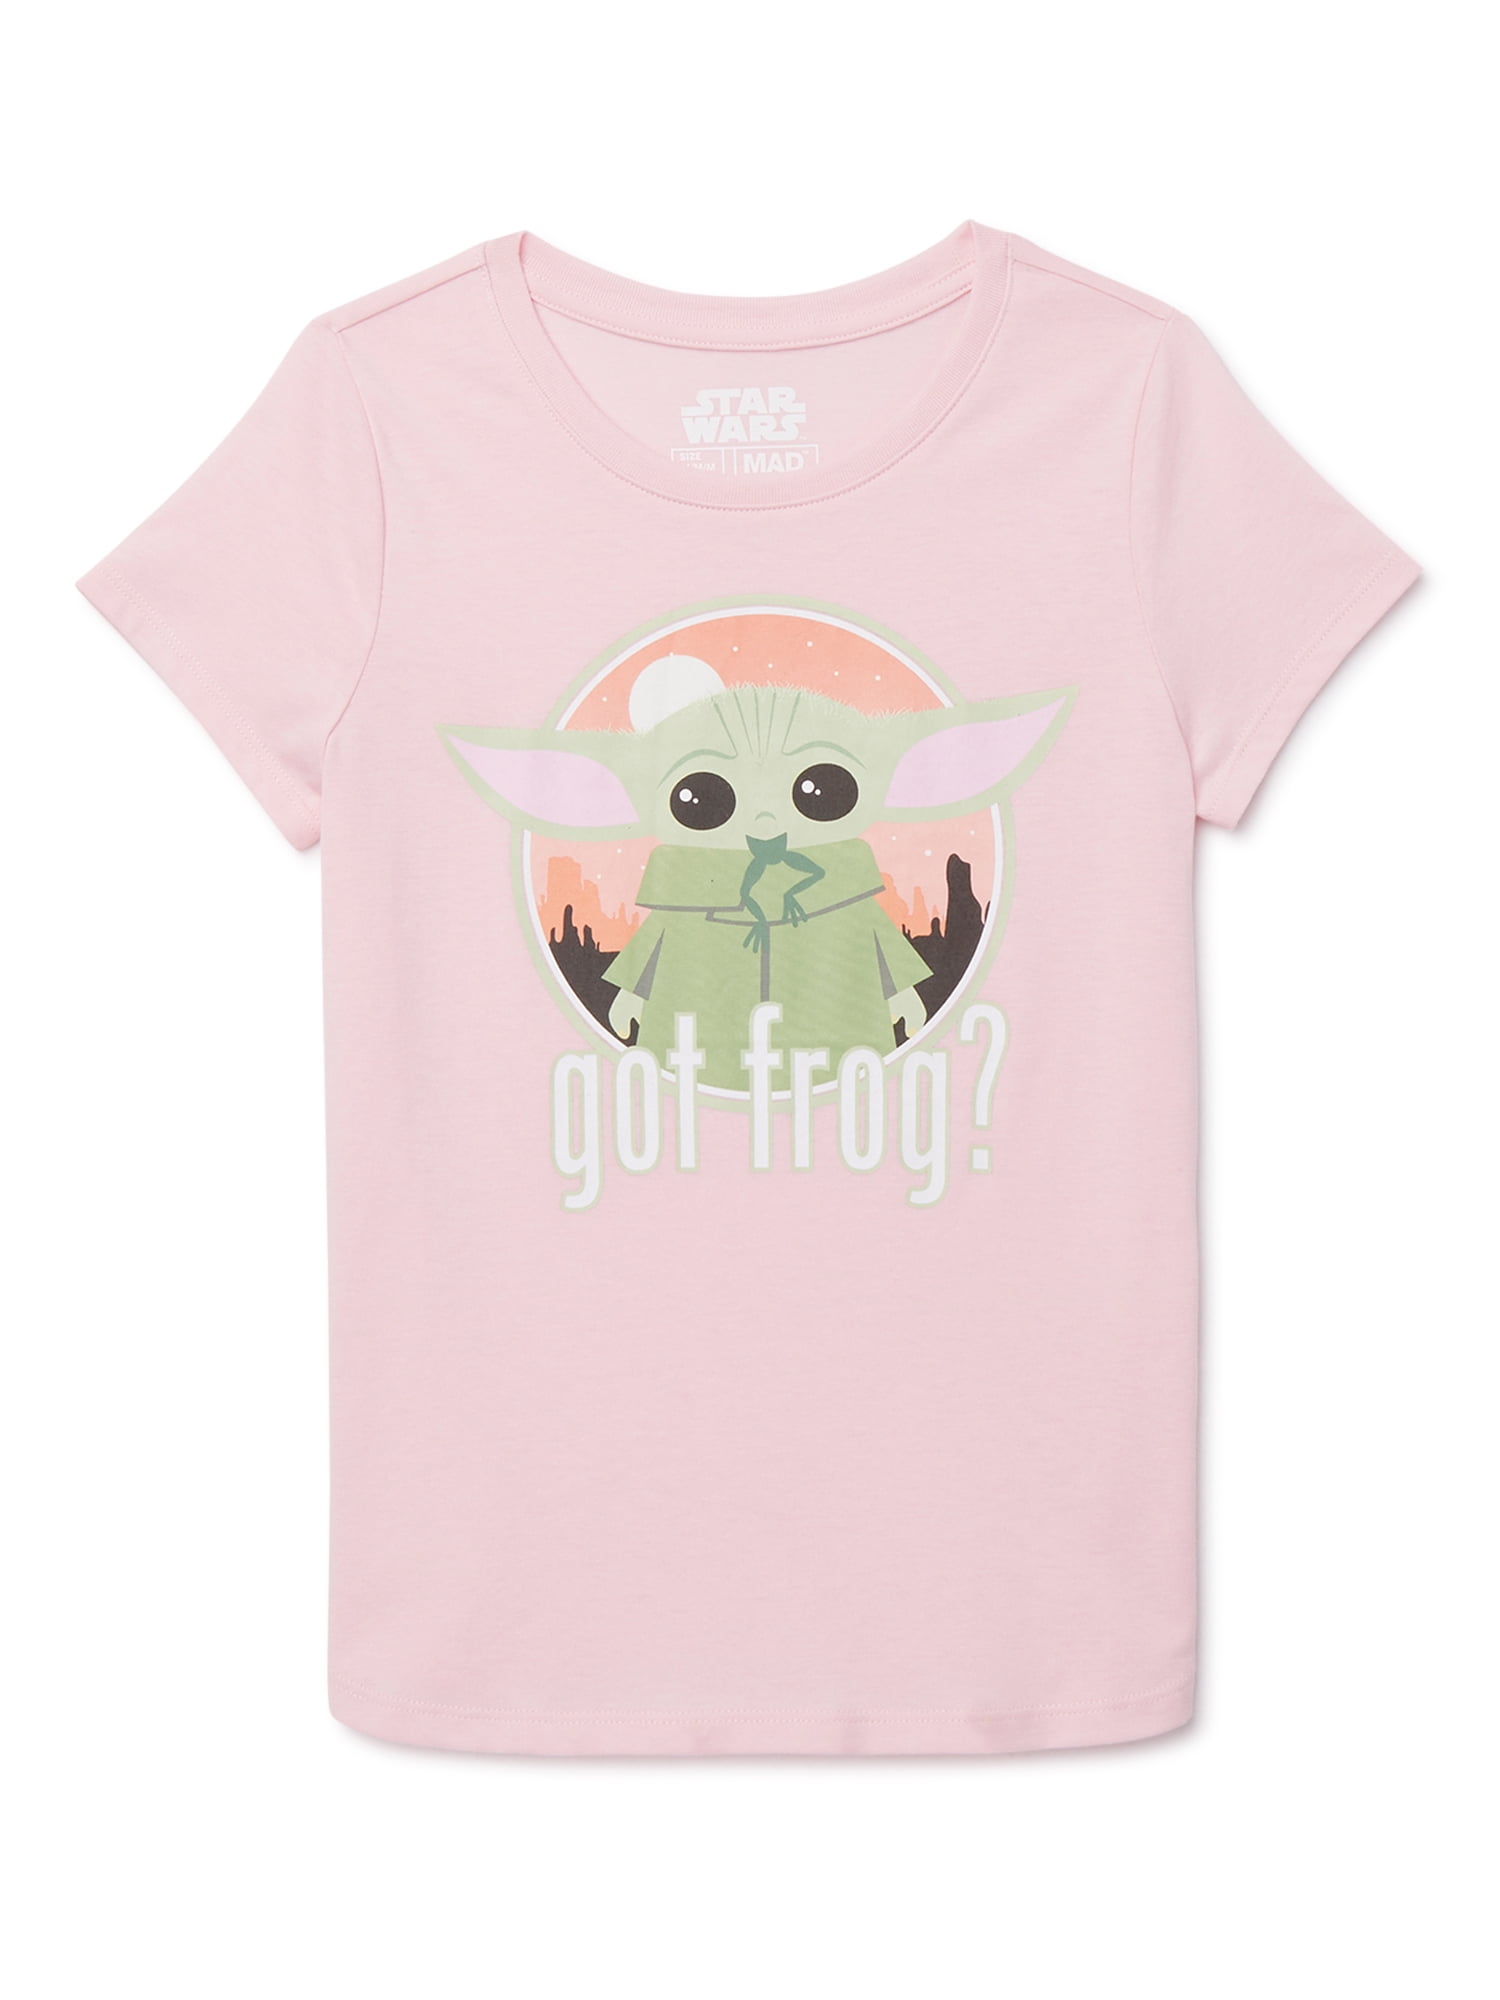 Star Wars - Star Wars Girls Baby Yoda Graphic T-Shirt, Sizes 4-16 -  Walmart.com - Walmart.com